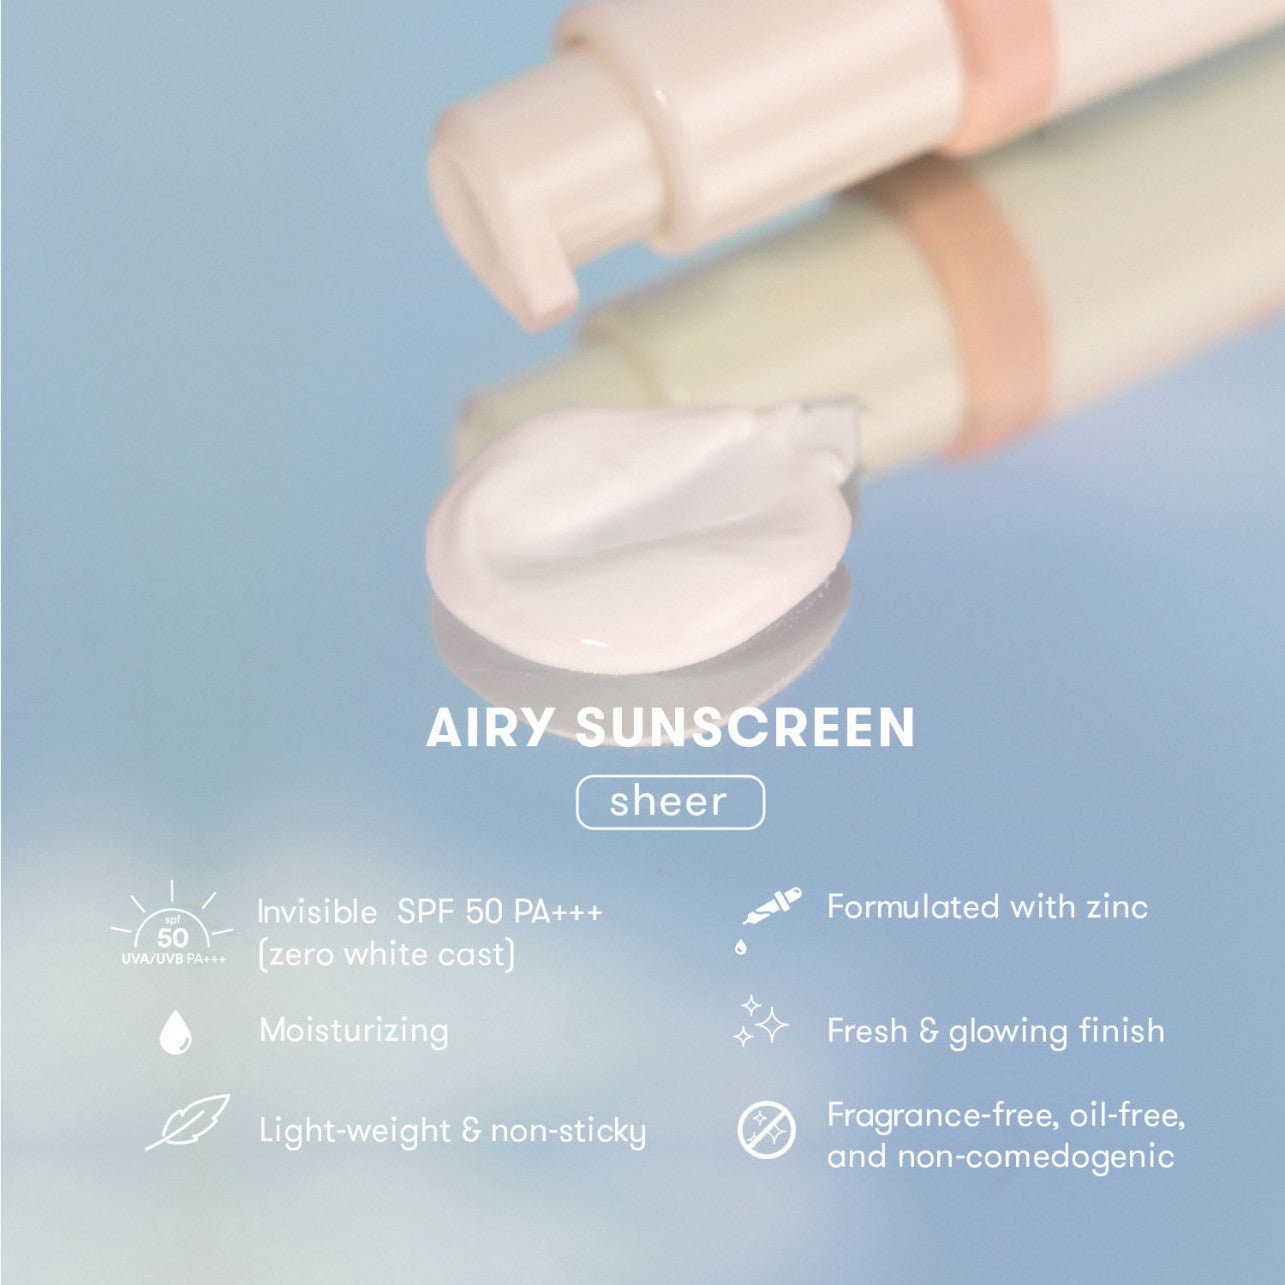 blk Cosmetics Daydream Airy Sunscreen SPF50 (Sheer)